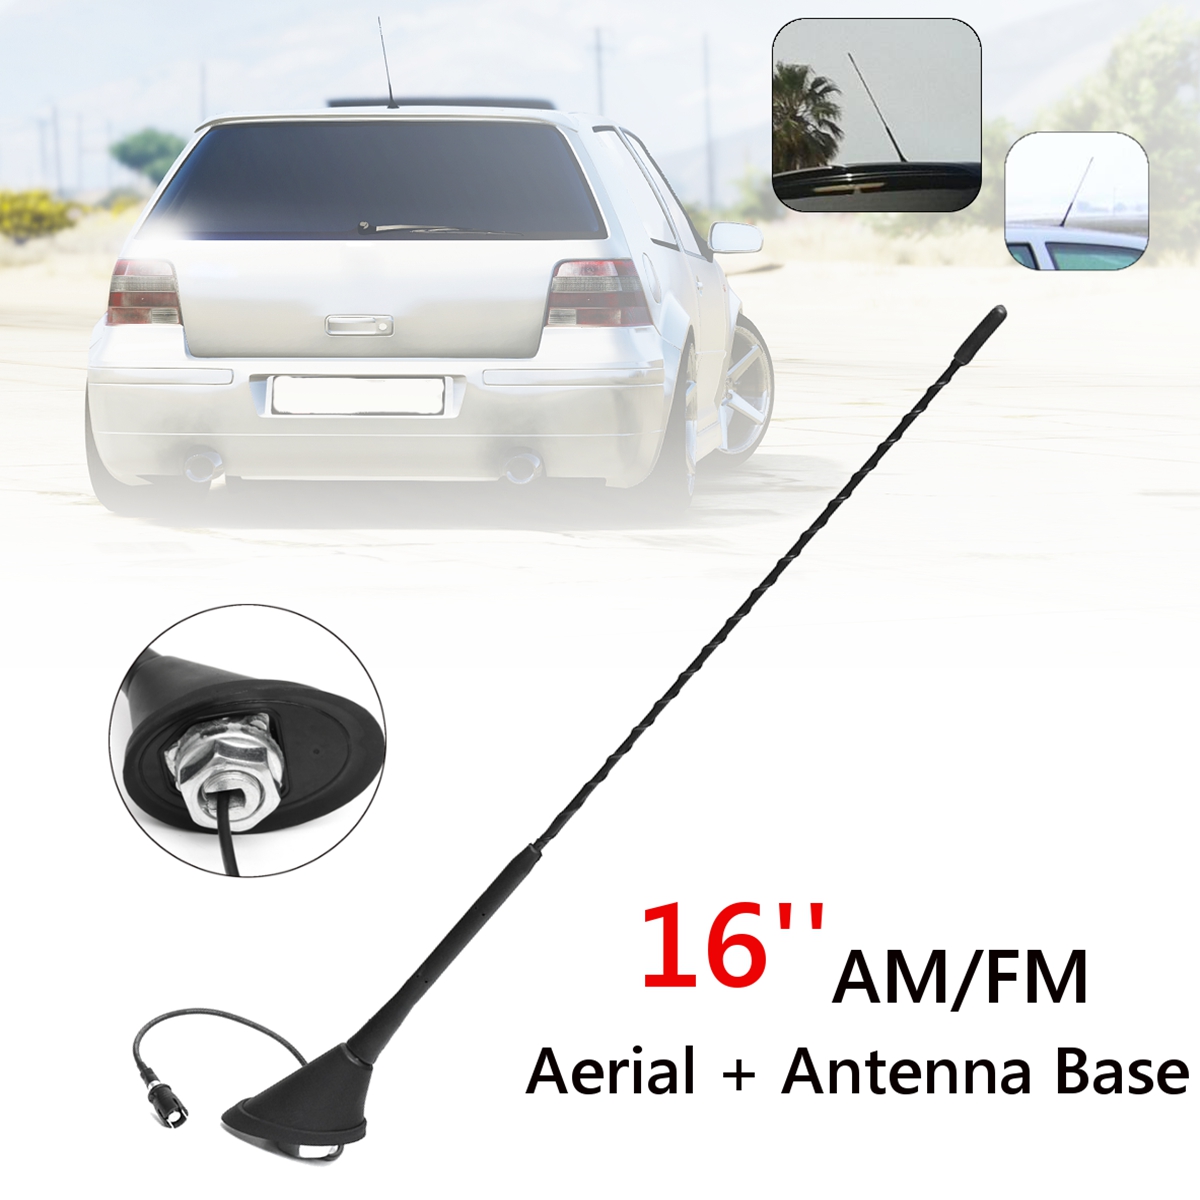 16-Inch-Radio-AMFM-Aerial-Antenna-Roof-Mast-Whip-Base-for-BMW-VW-Passat-Golf-1261520